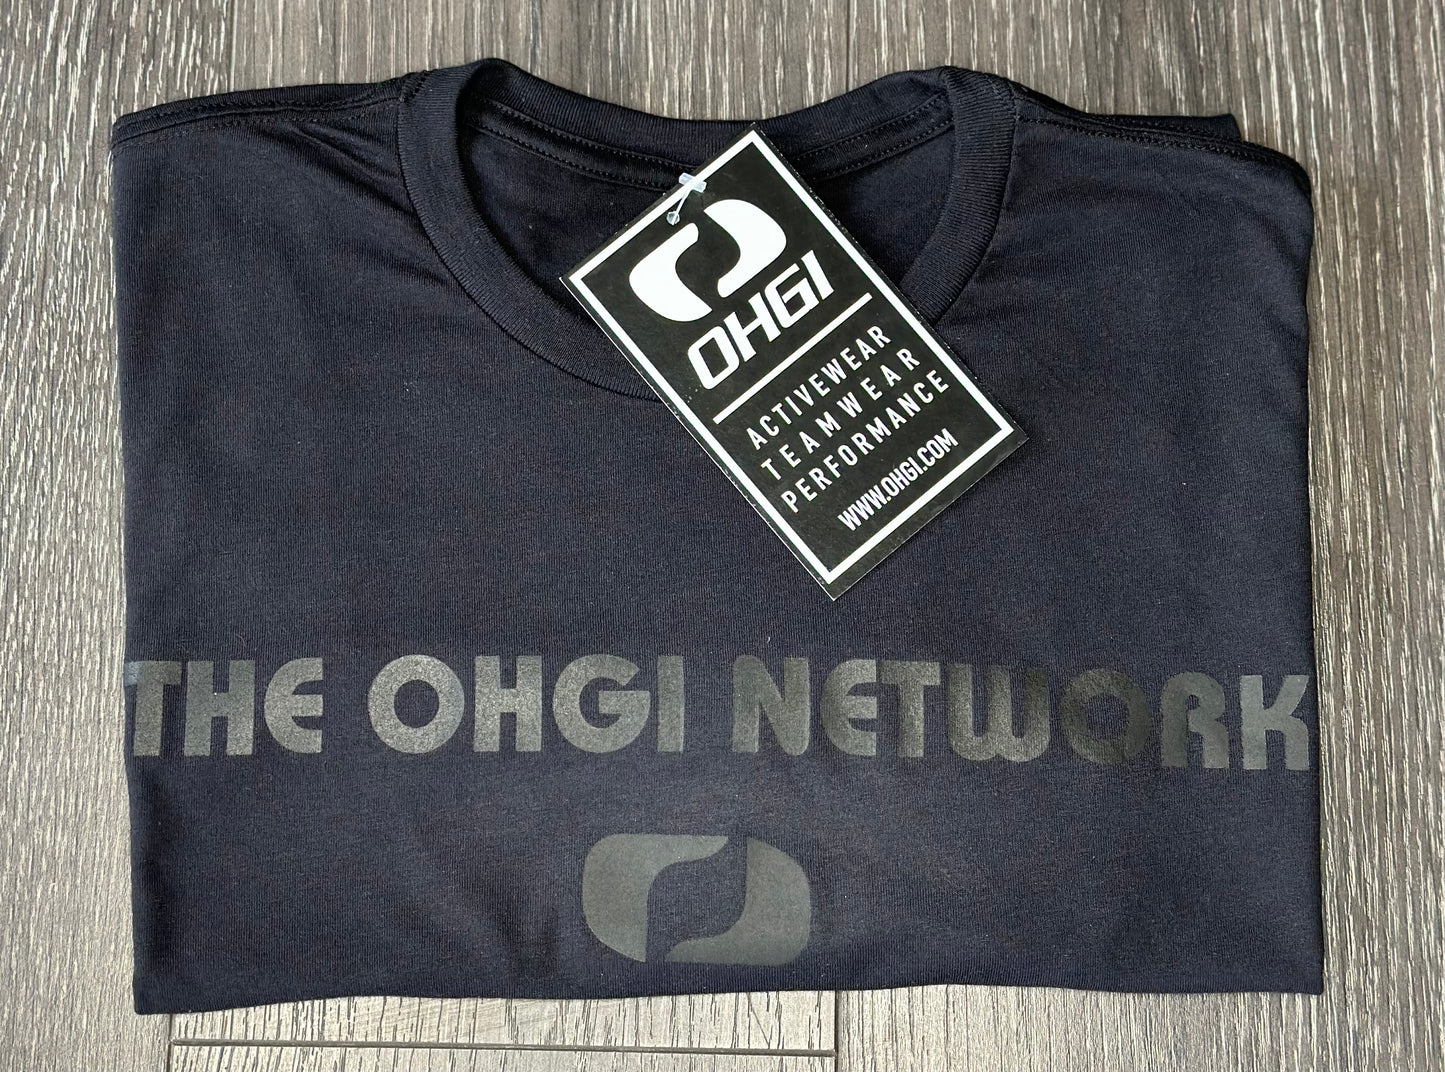 The OHGI Network ~ T-shirt (black-black)